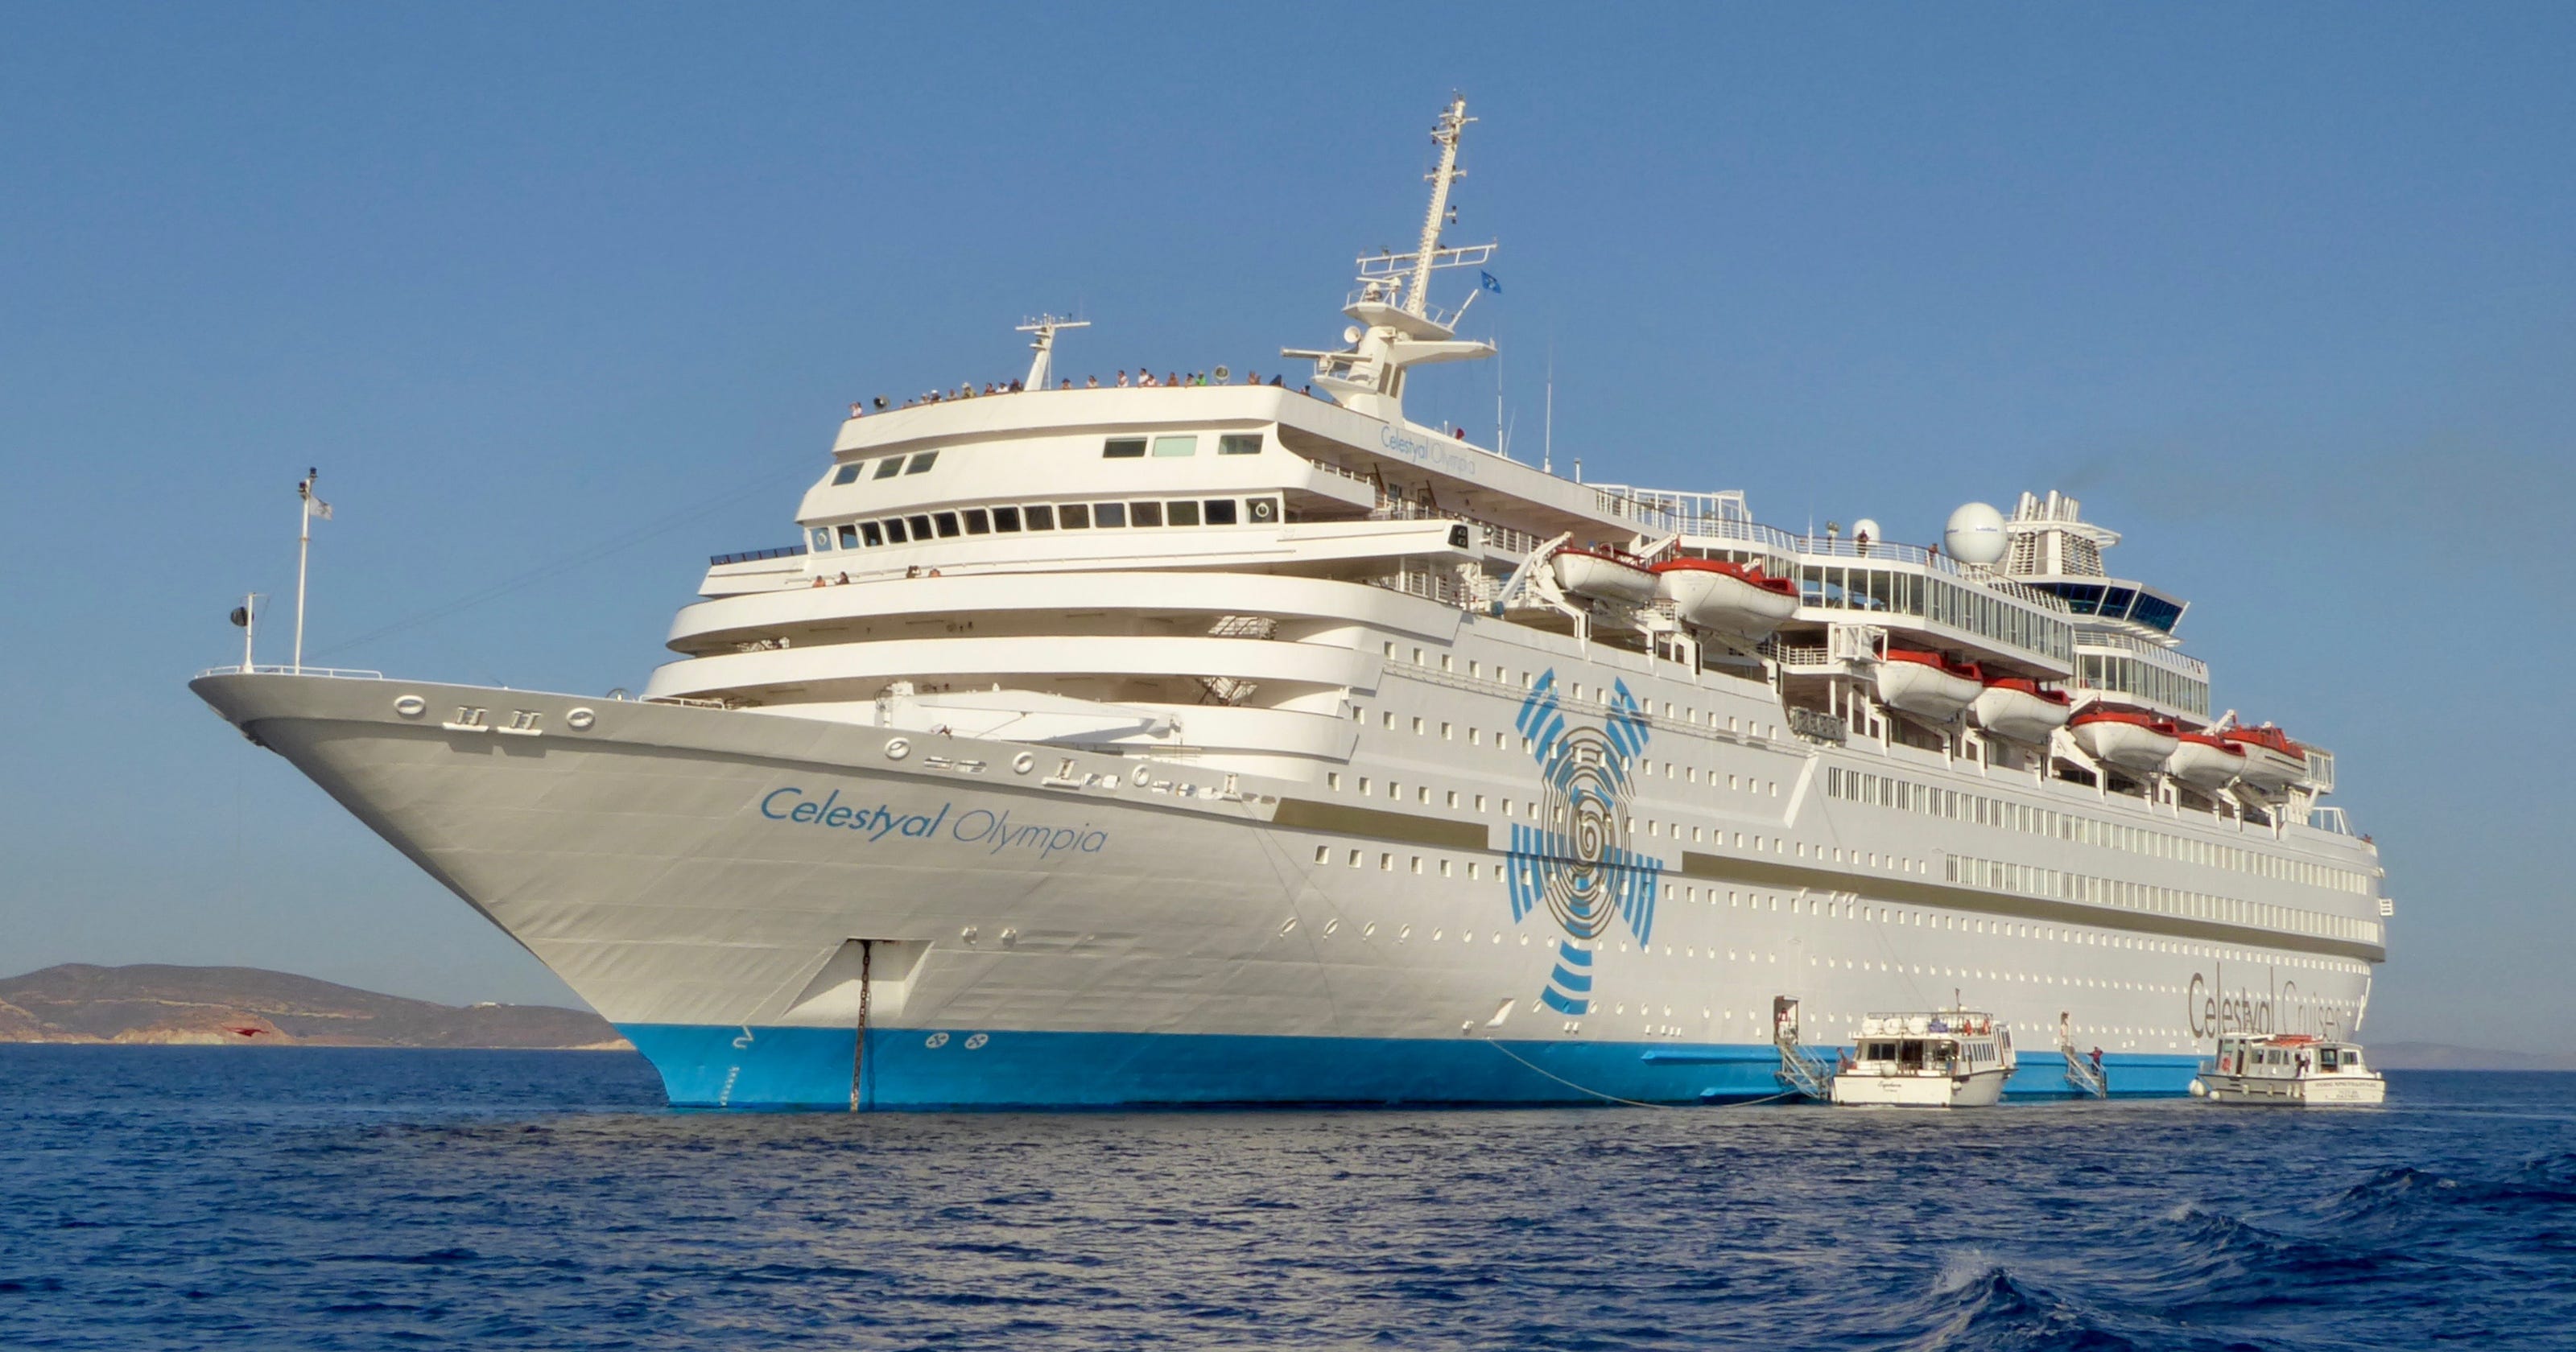 cruise ship in greece today